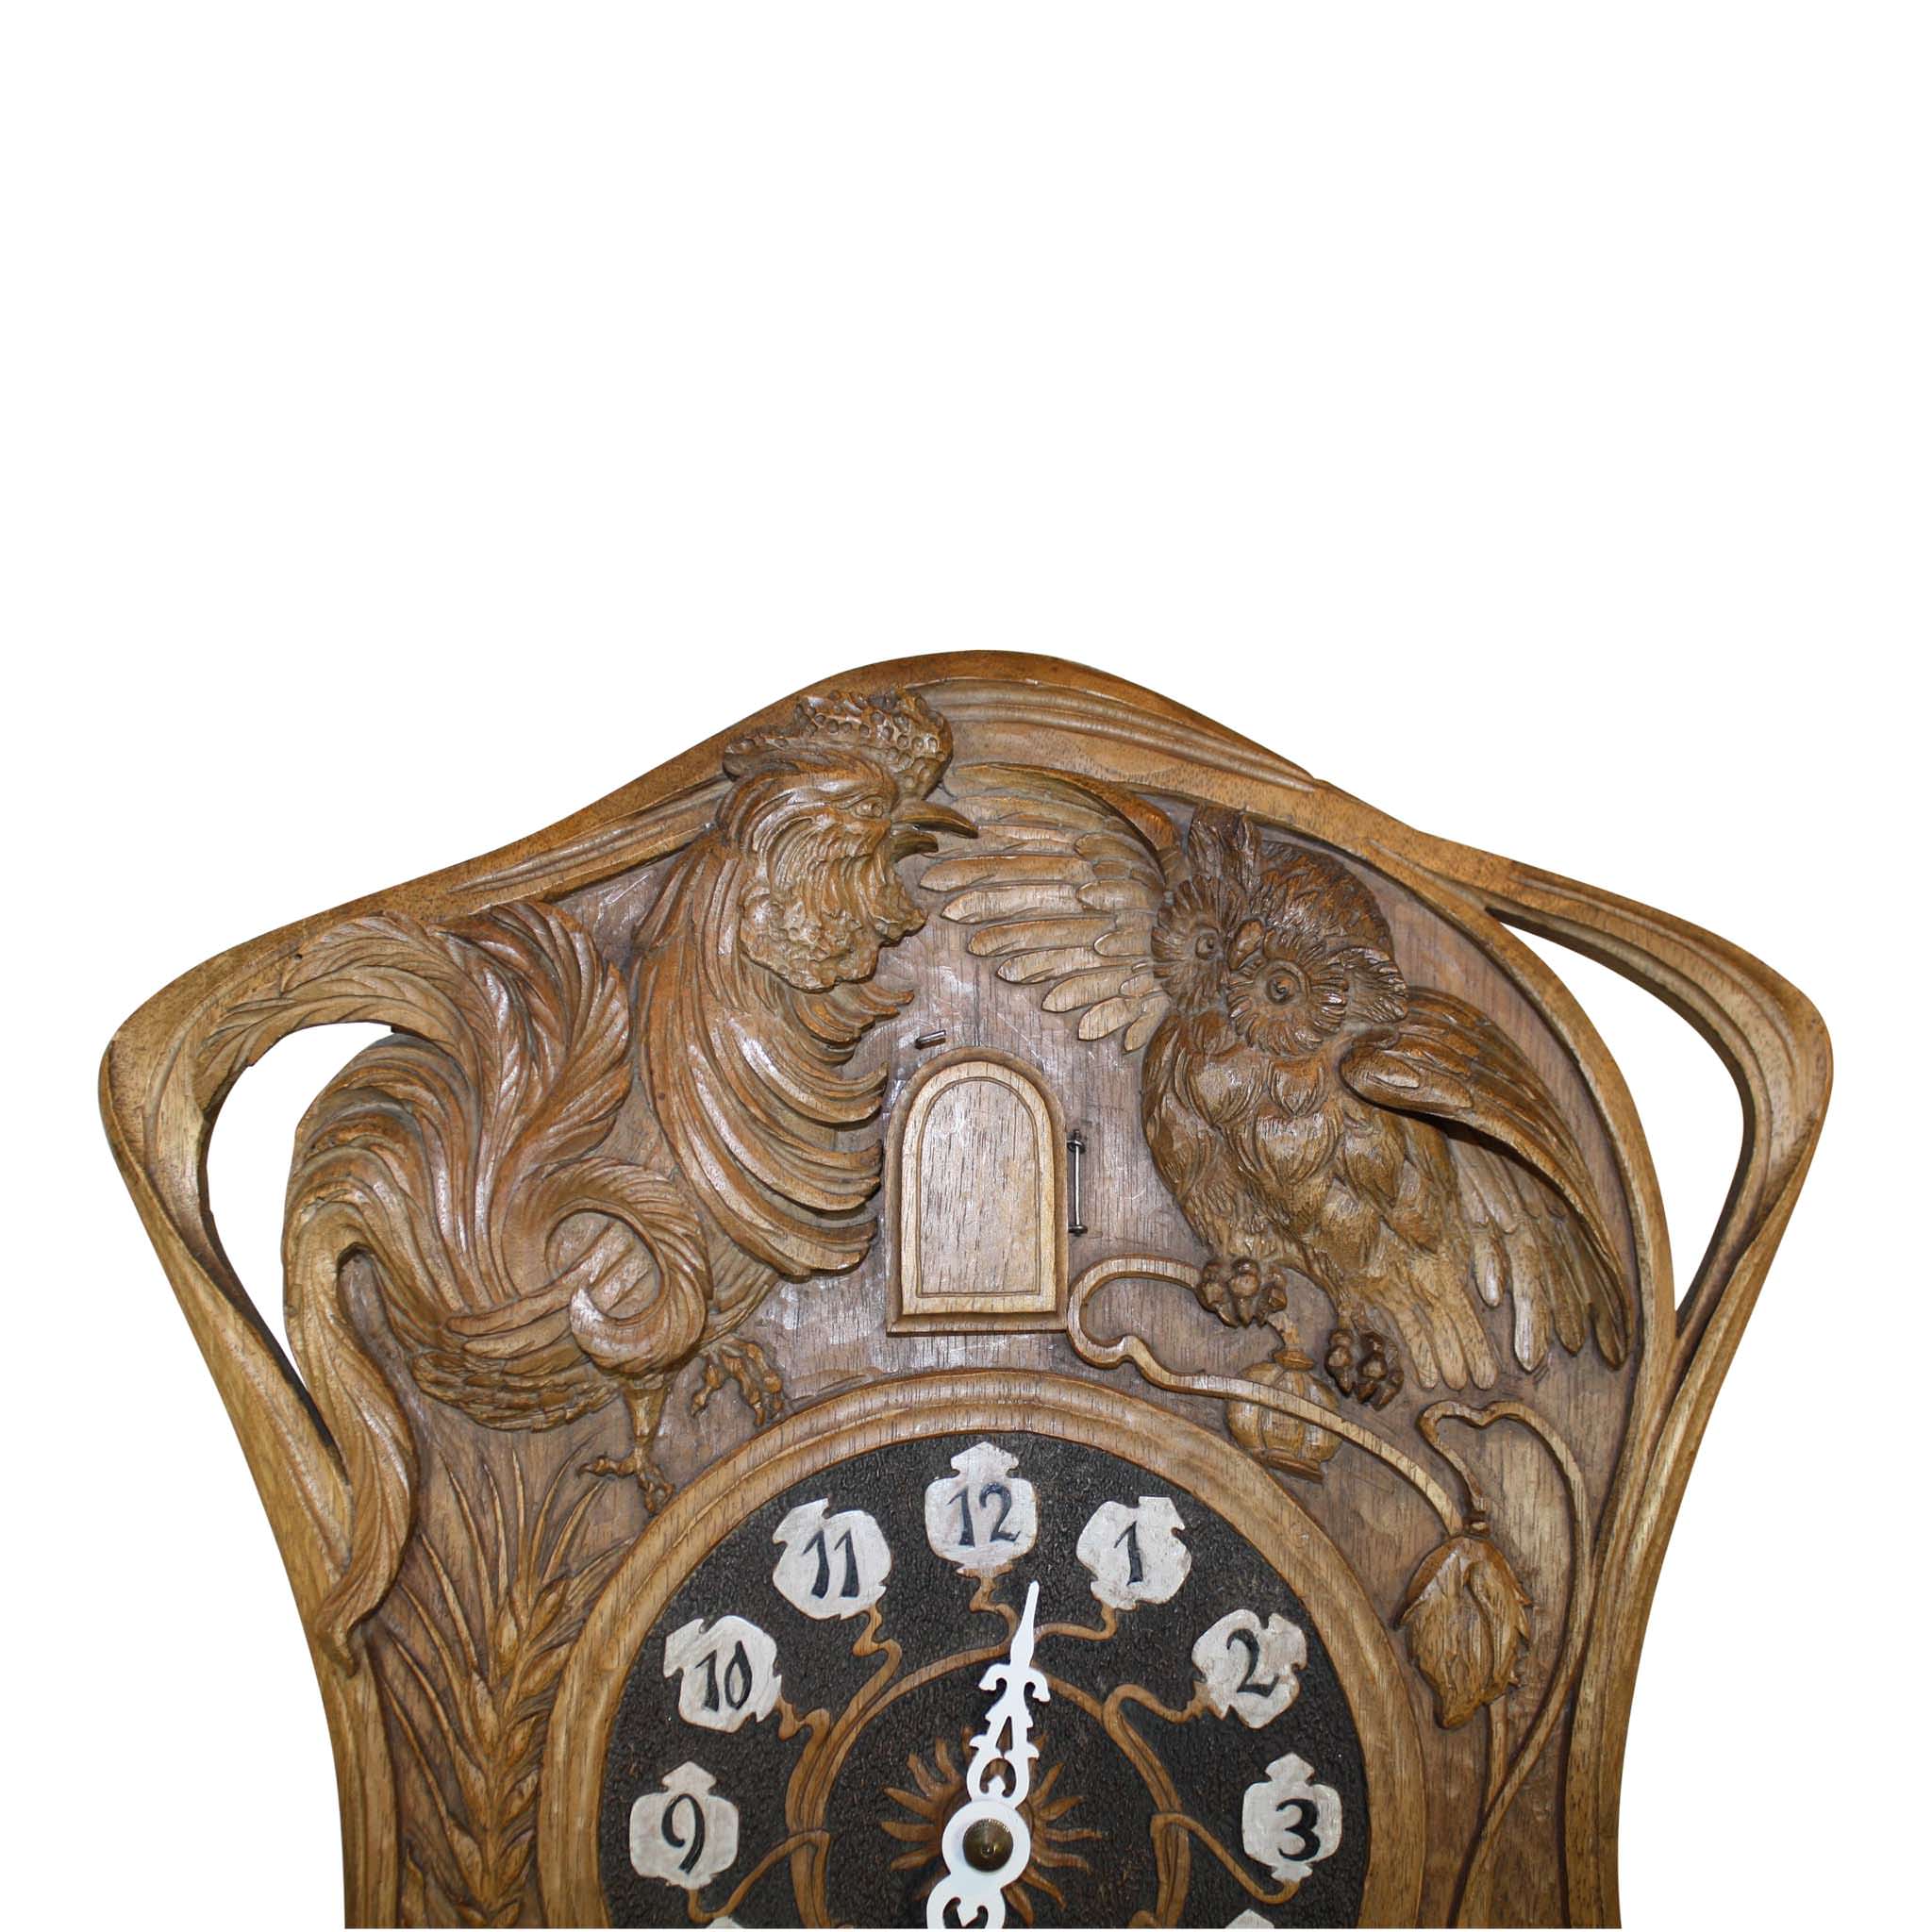 Carved Cuckoo Clock